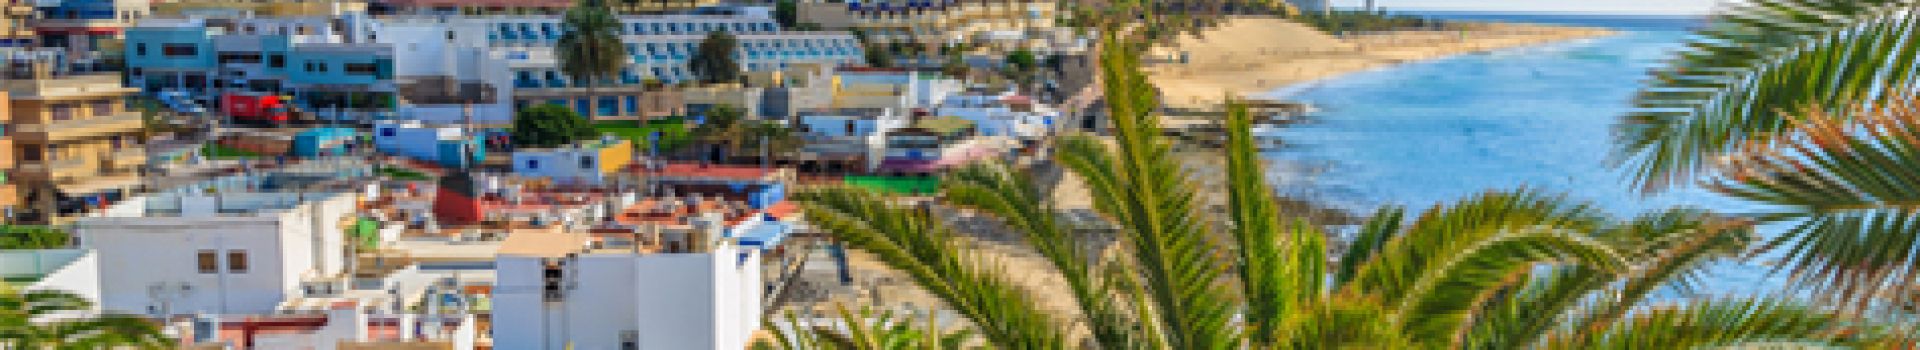 Holidays to Lanzarote | Book Flights & Hotel | Cassidy Travel